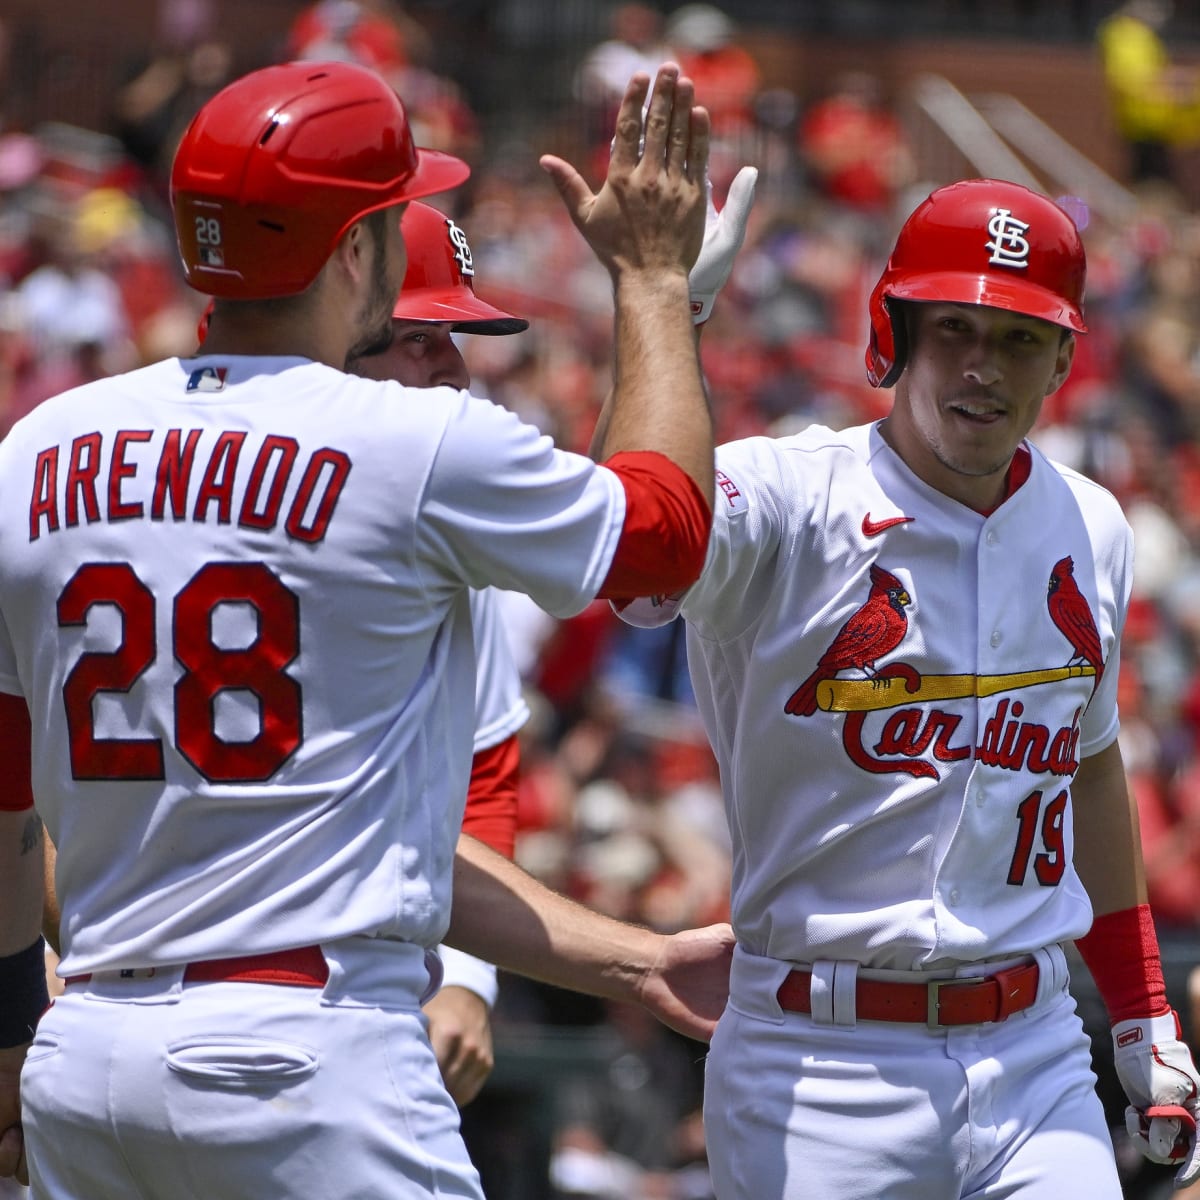 Nolan Arenado and the St. Louis Cardinals struggling through